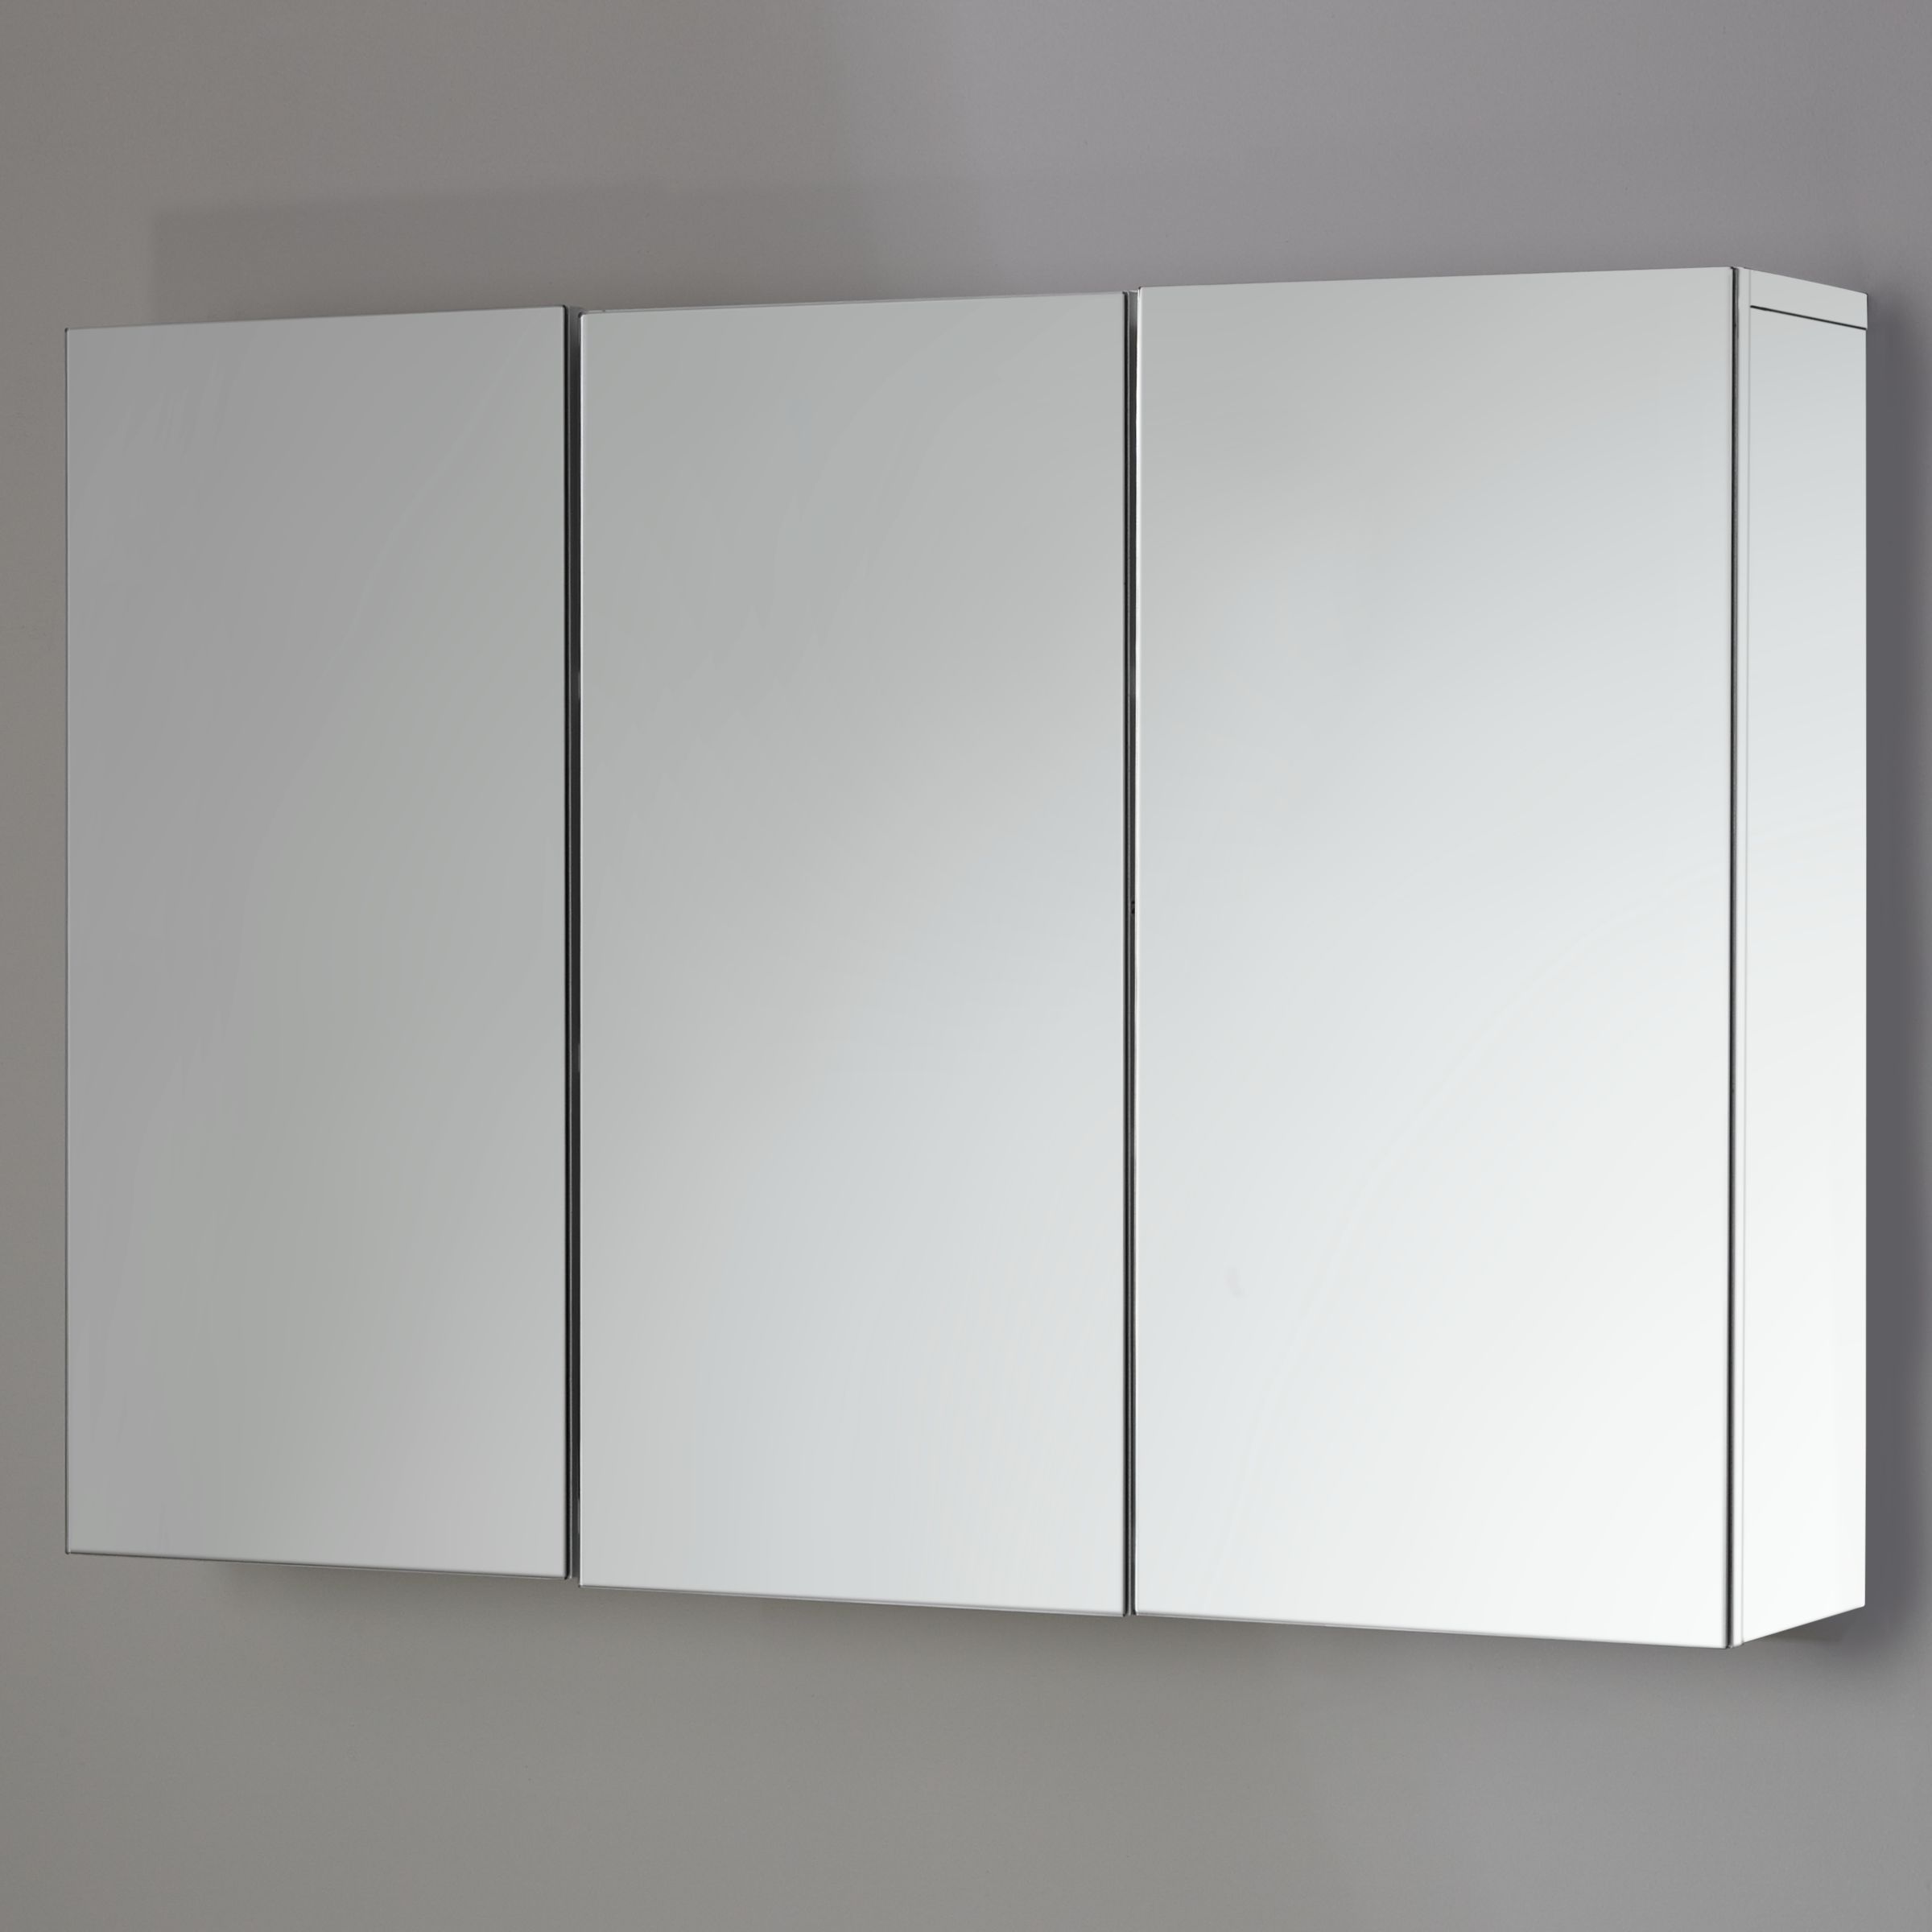 John Lewis & Partners Gloss Triple Mirrored Cabinet, White